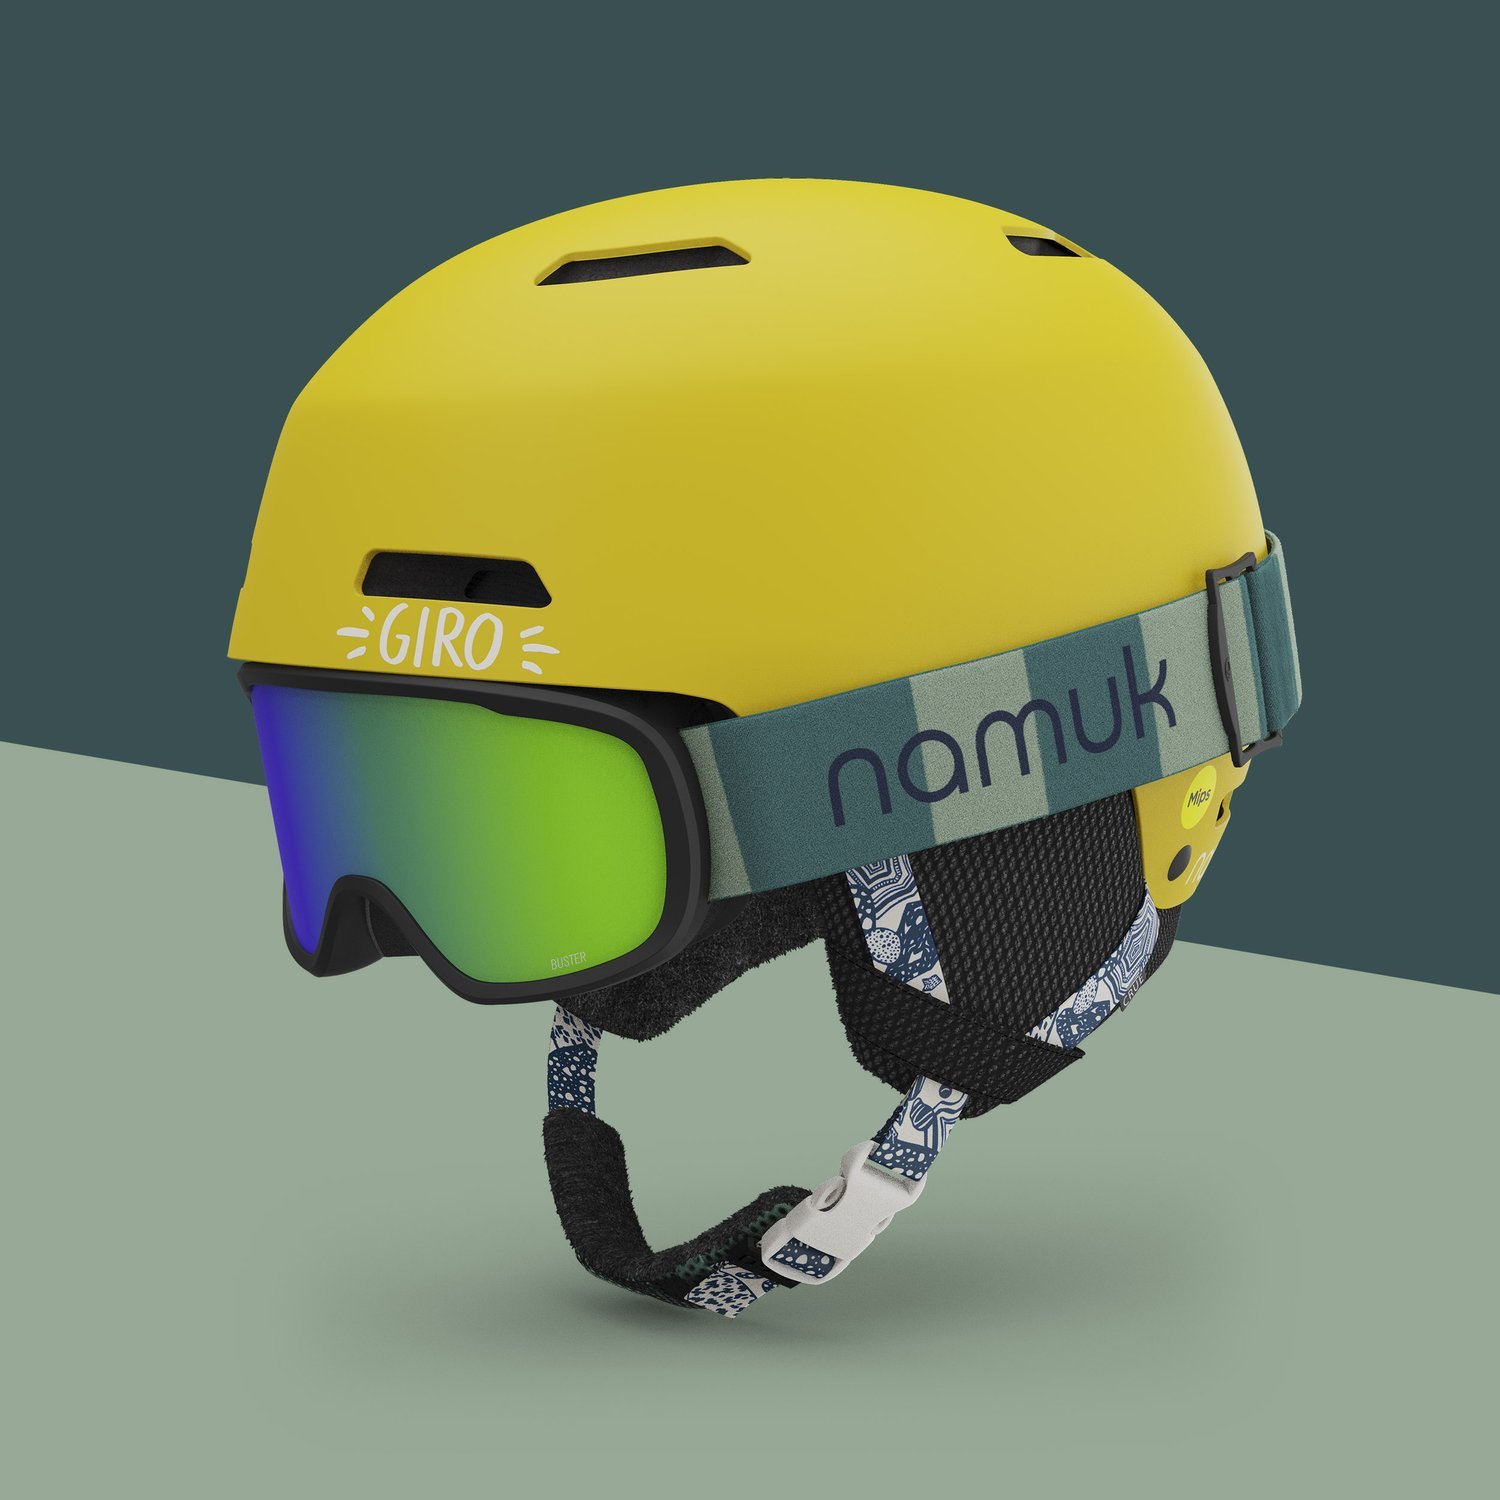 Giro Namuk Crue Helmet Goggles product renderings (Copy)